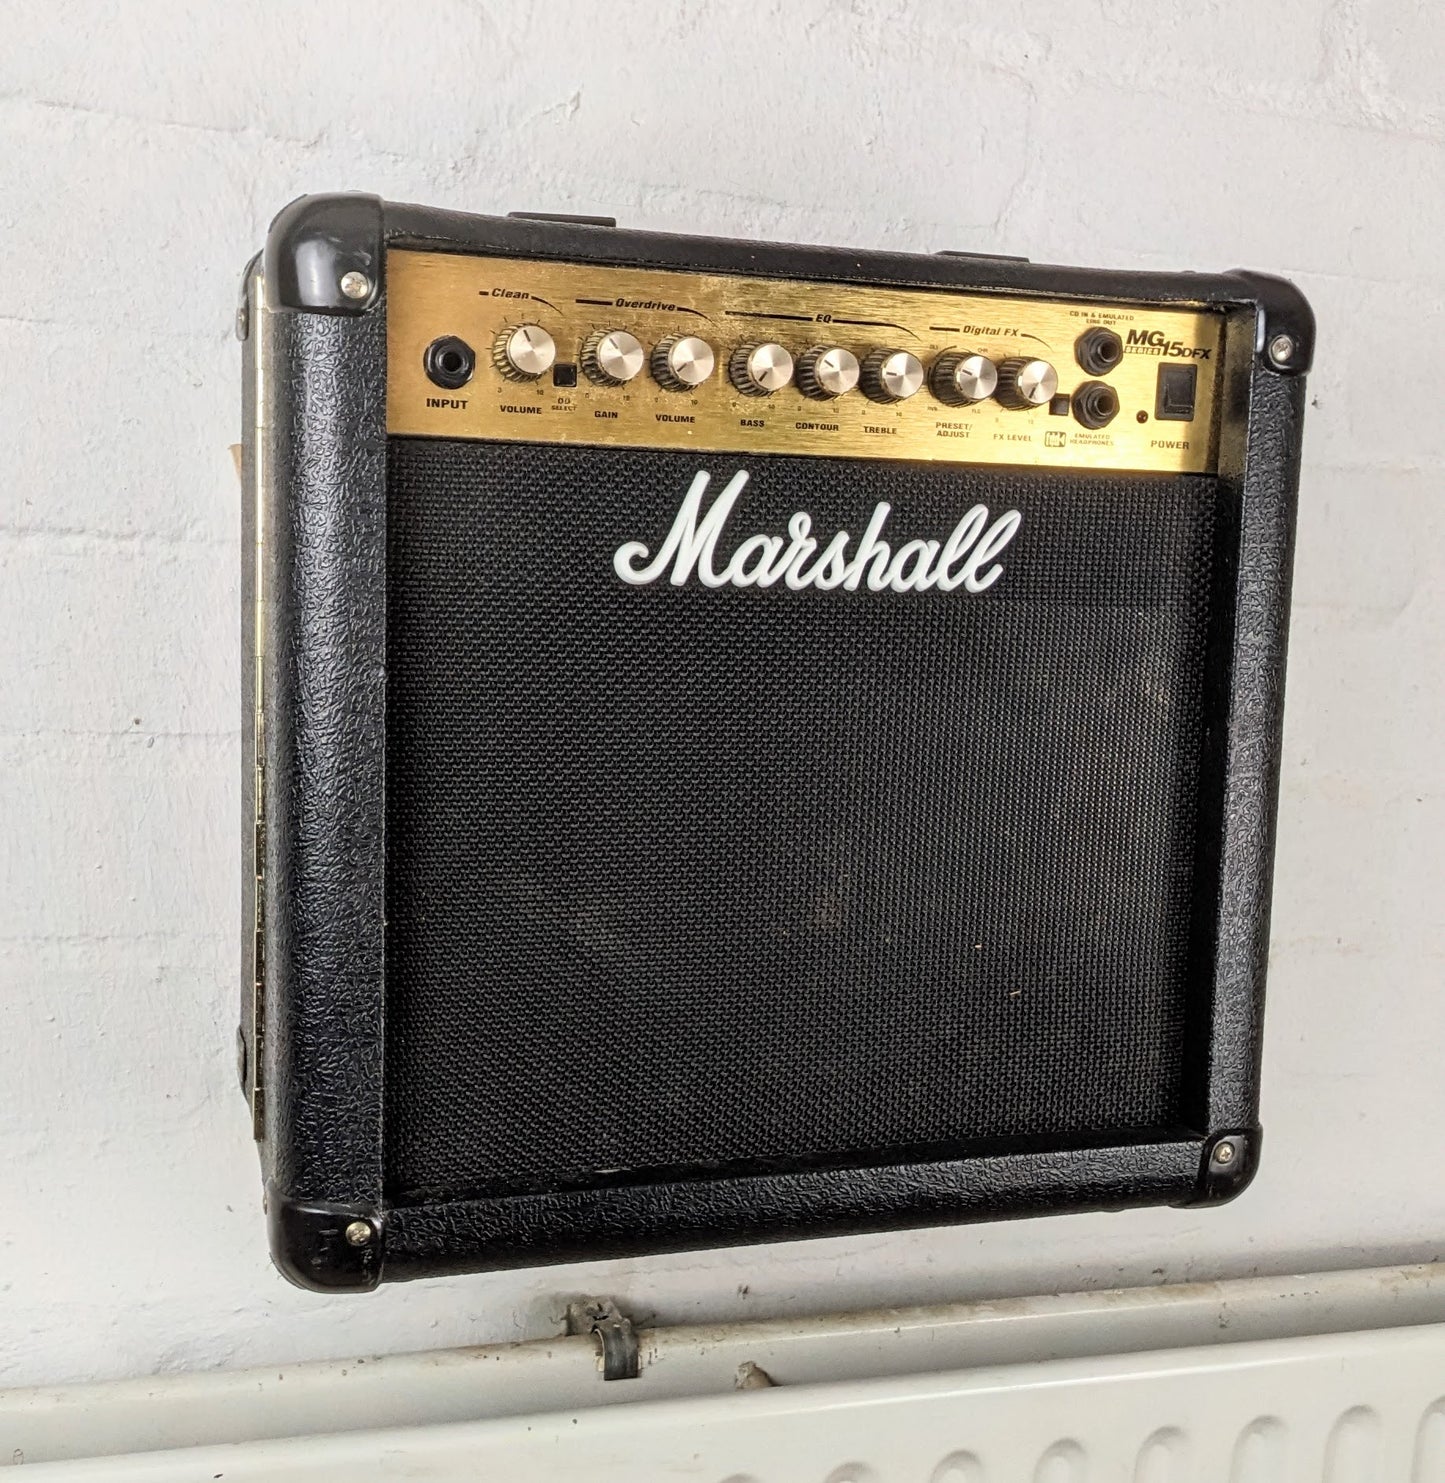 Marschall-Magnet-Schrank XL